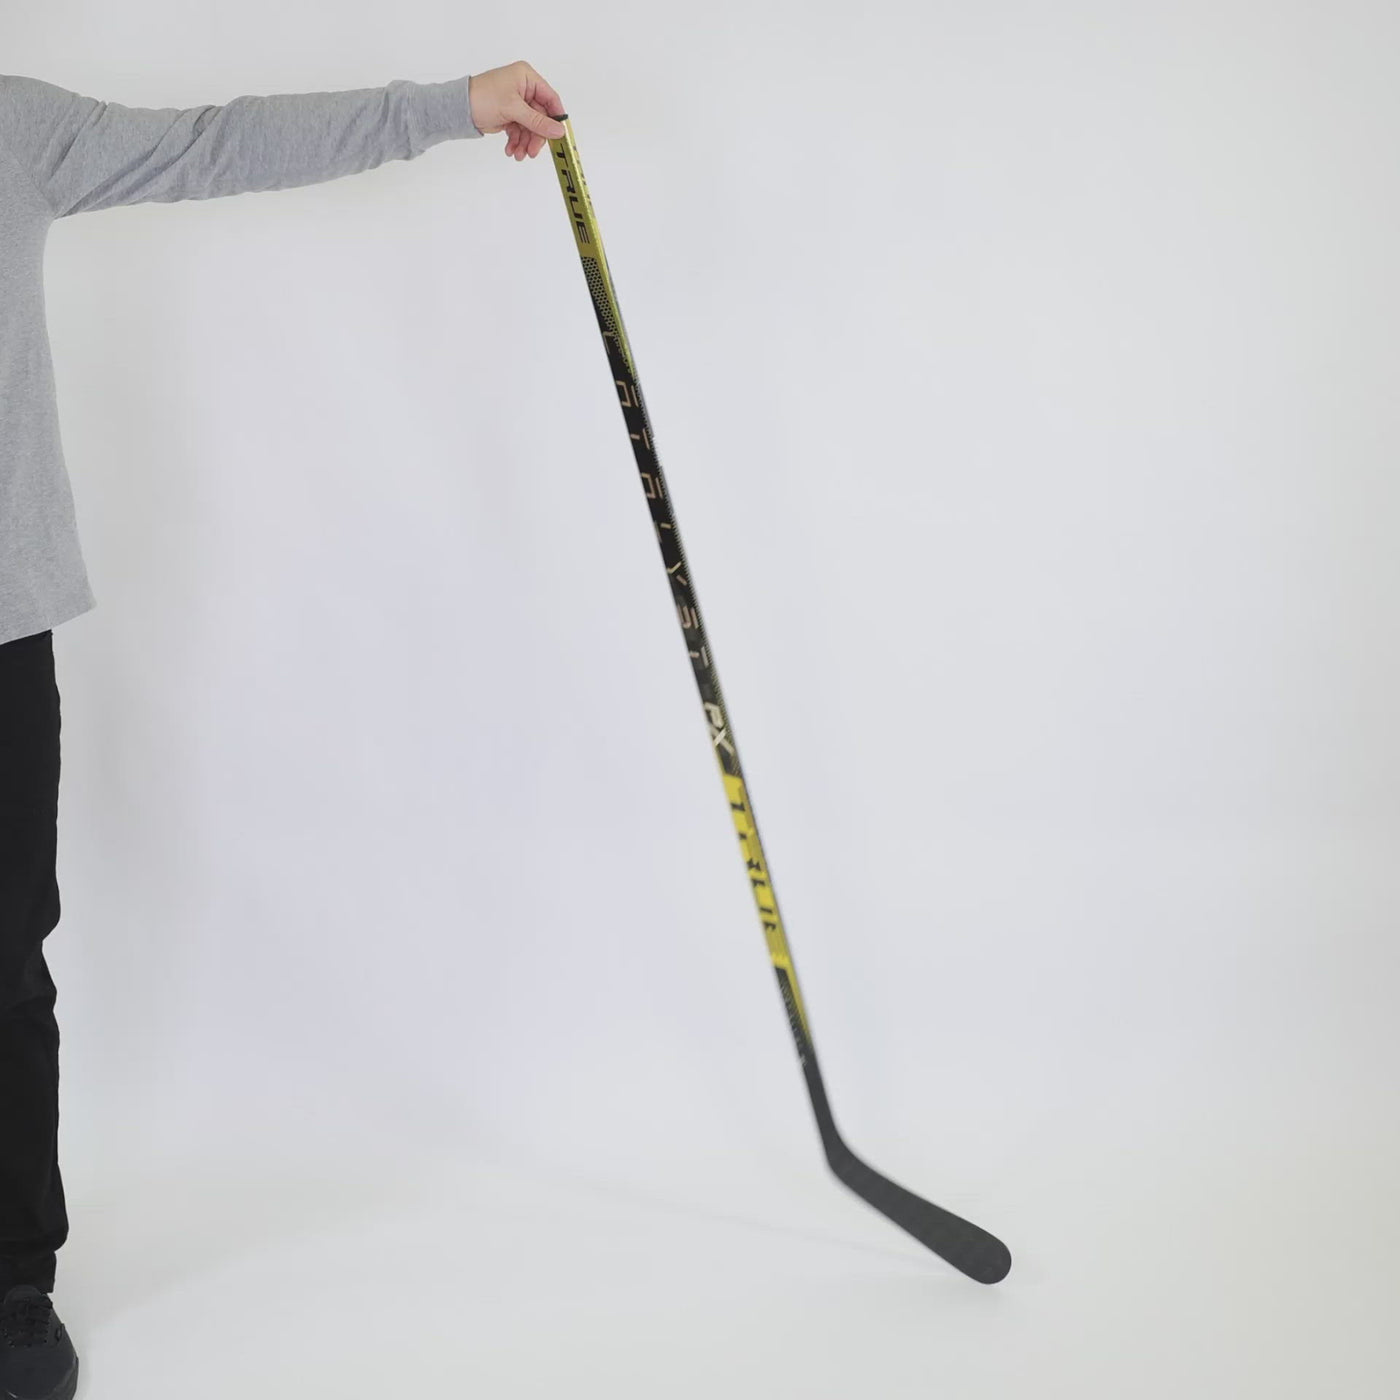 TRUE Catalyst PX Junior Hockey Stick - 50 Flex